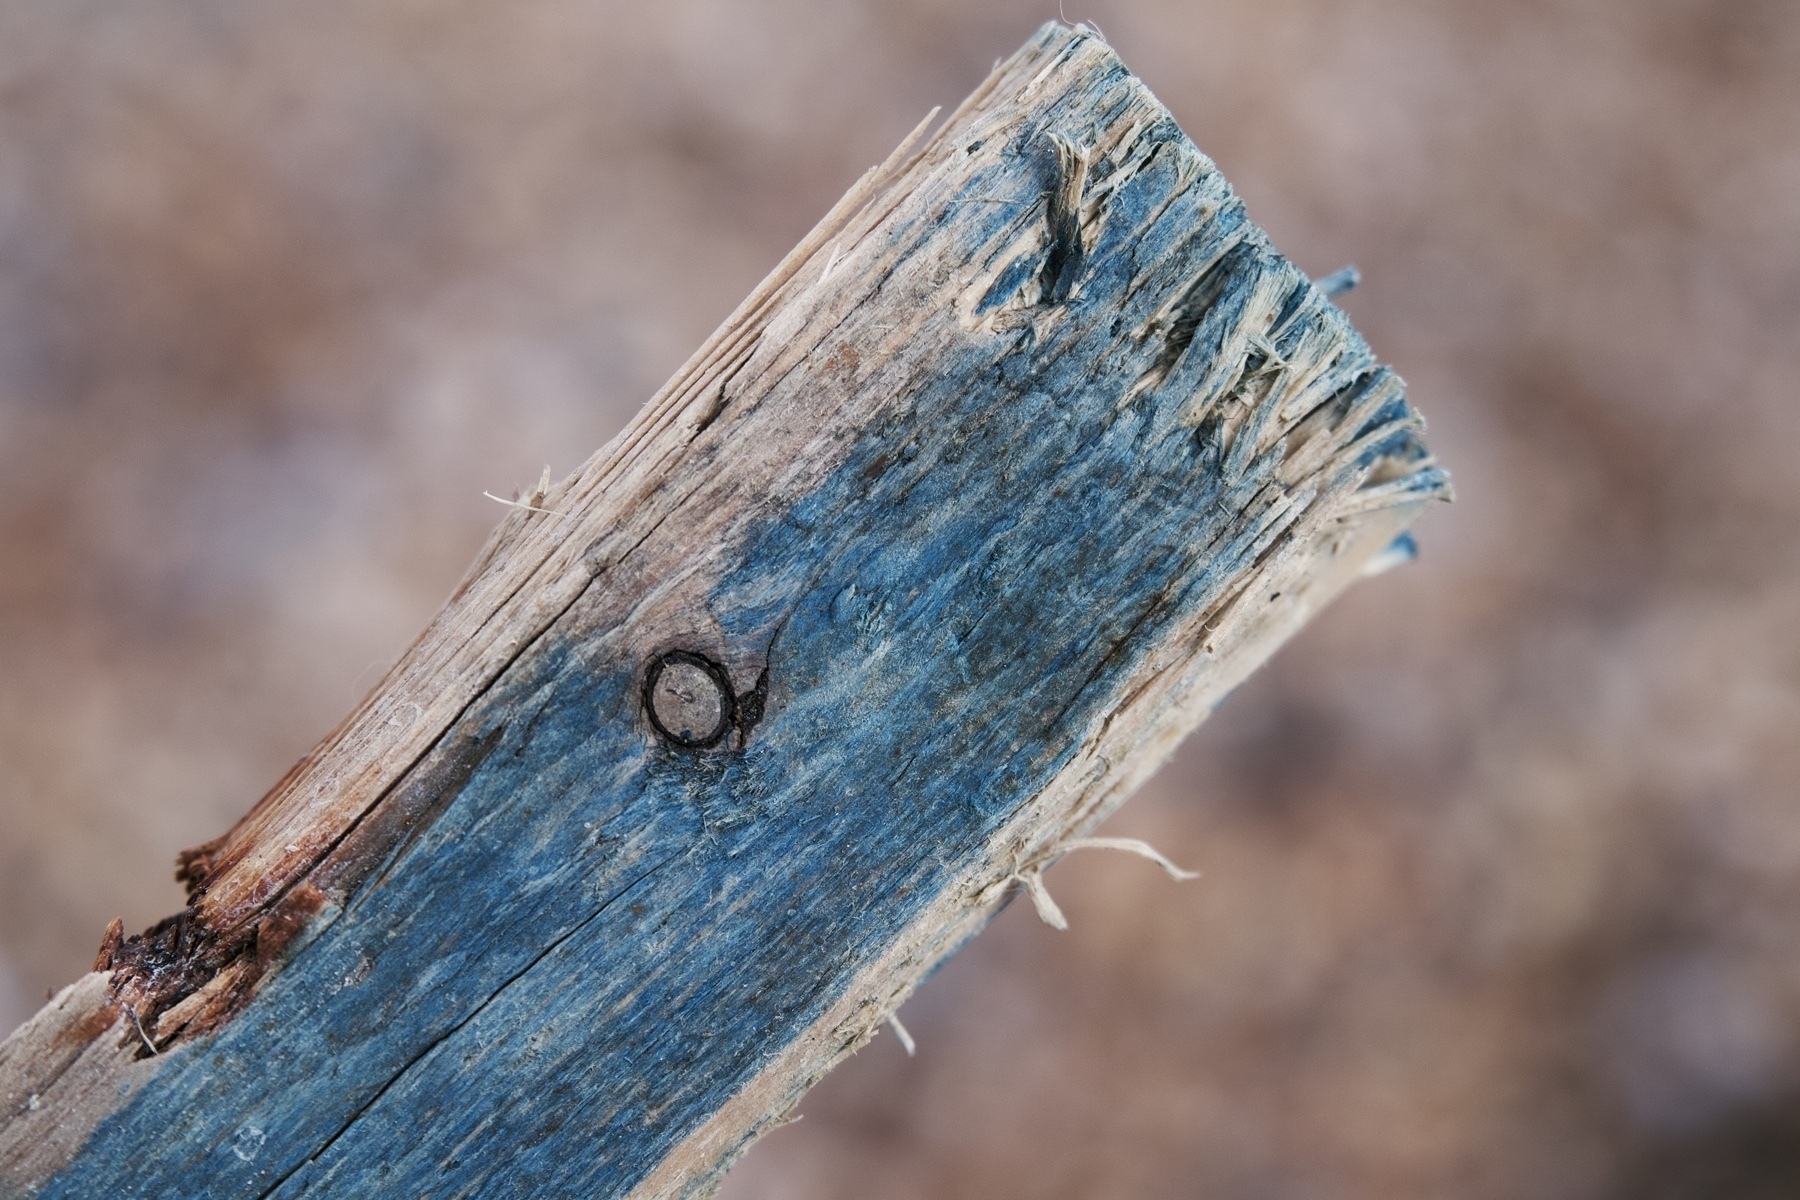 Driftwood found on Shoreham Beach